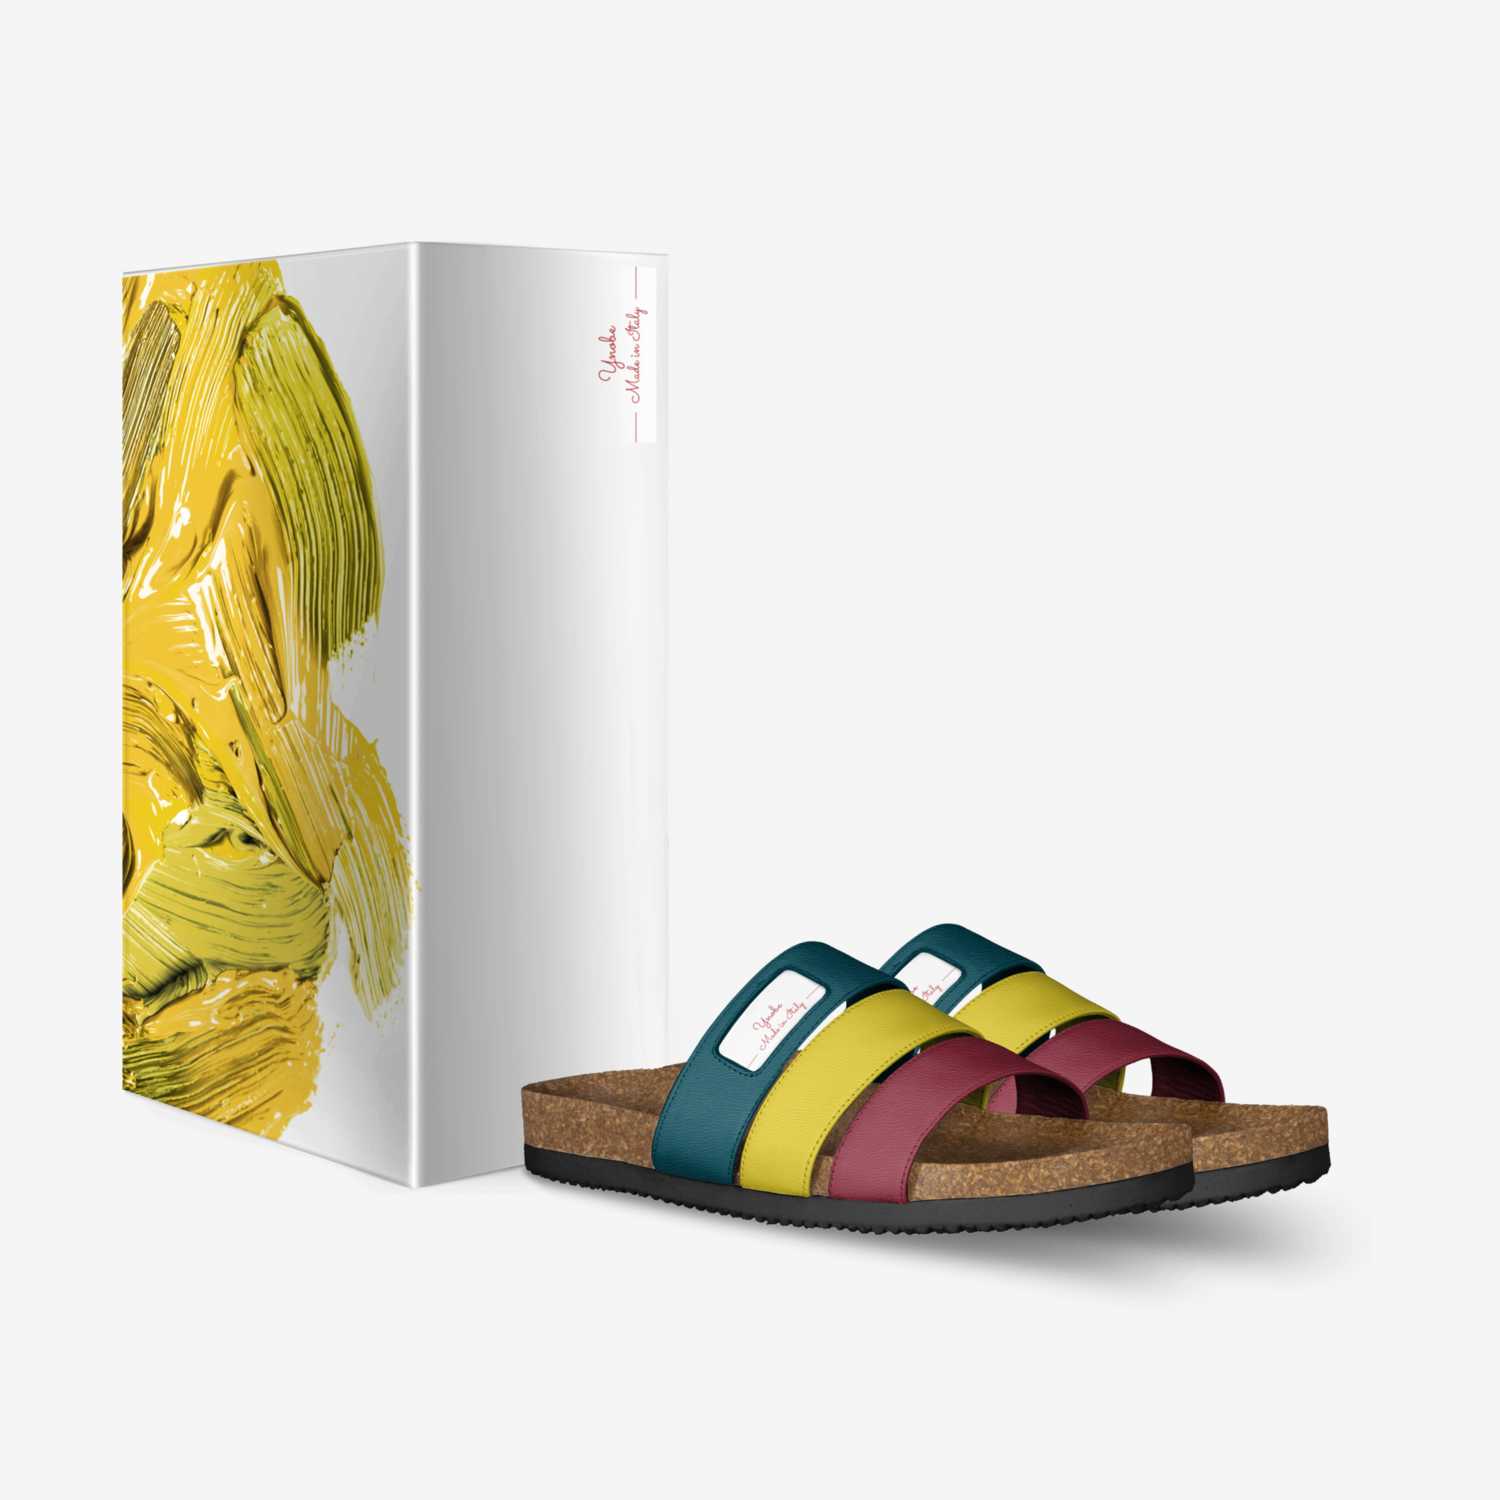 Ynobe custom made in Italy shoes by Ebony Broady | Box view